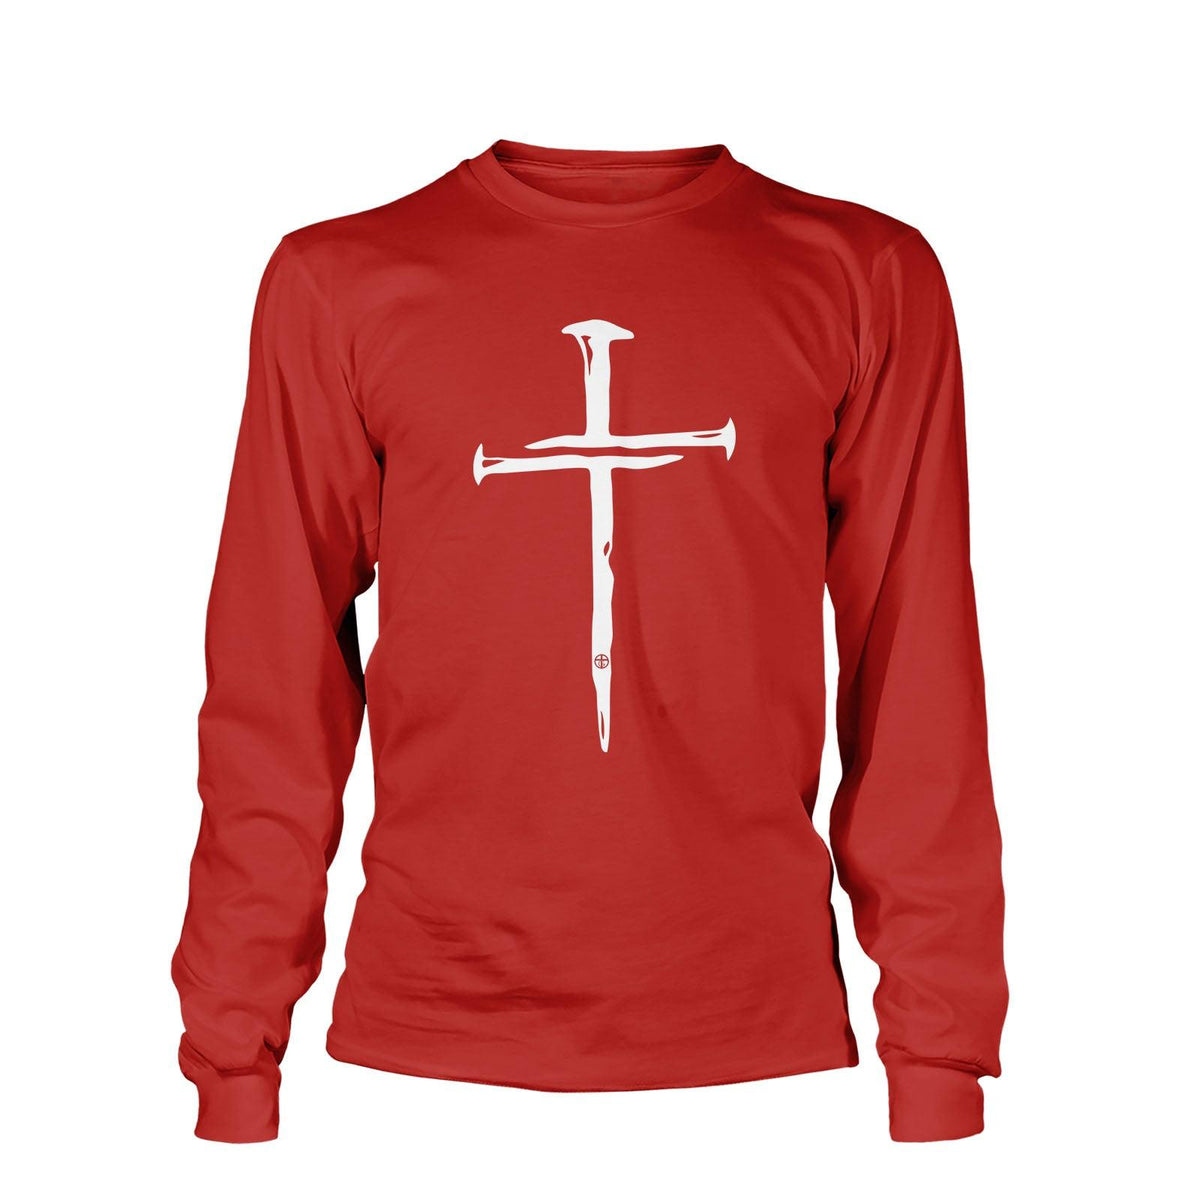 Nail Cross Maroon Long Sleeves T-Shirt - Our True God